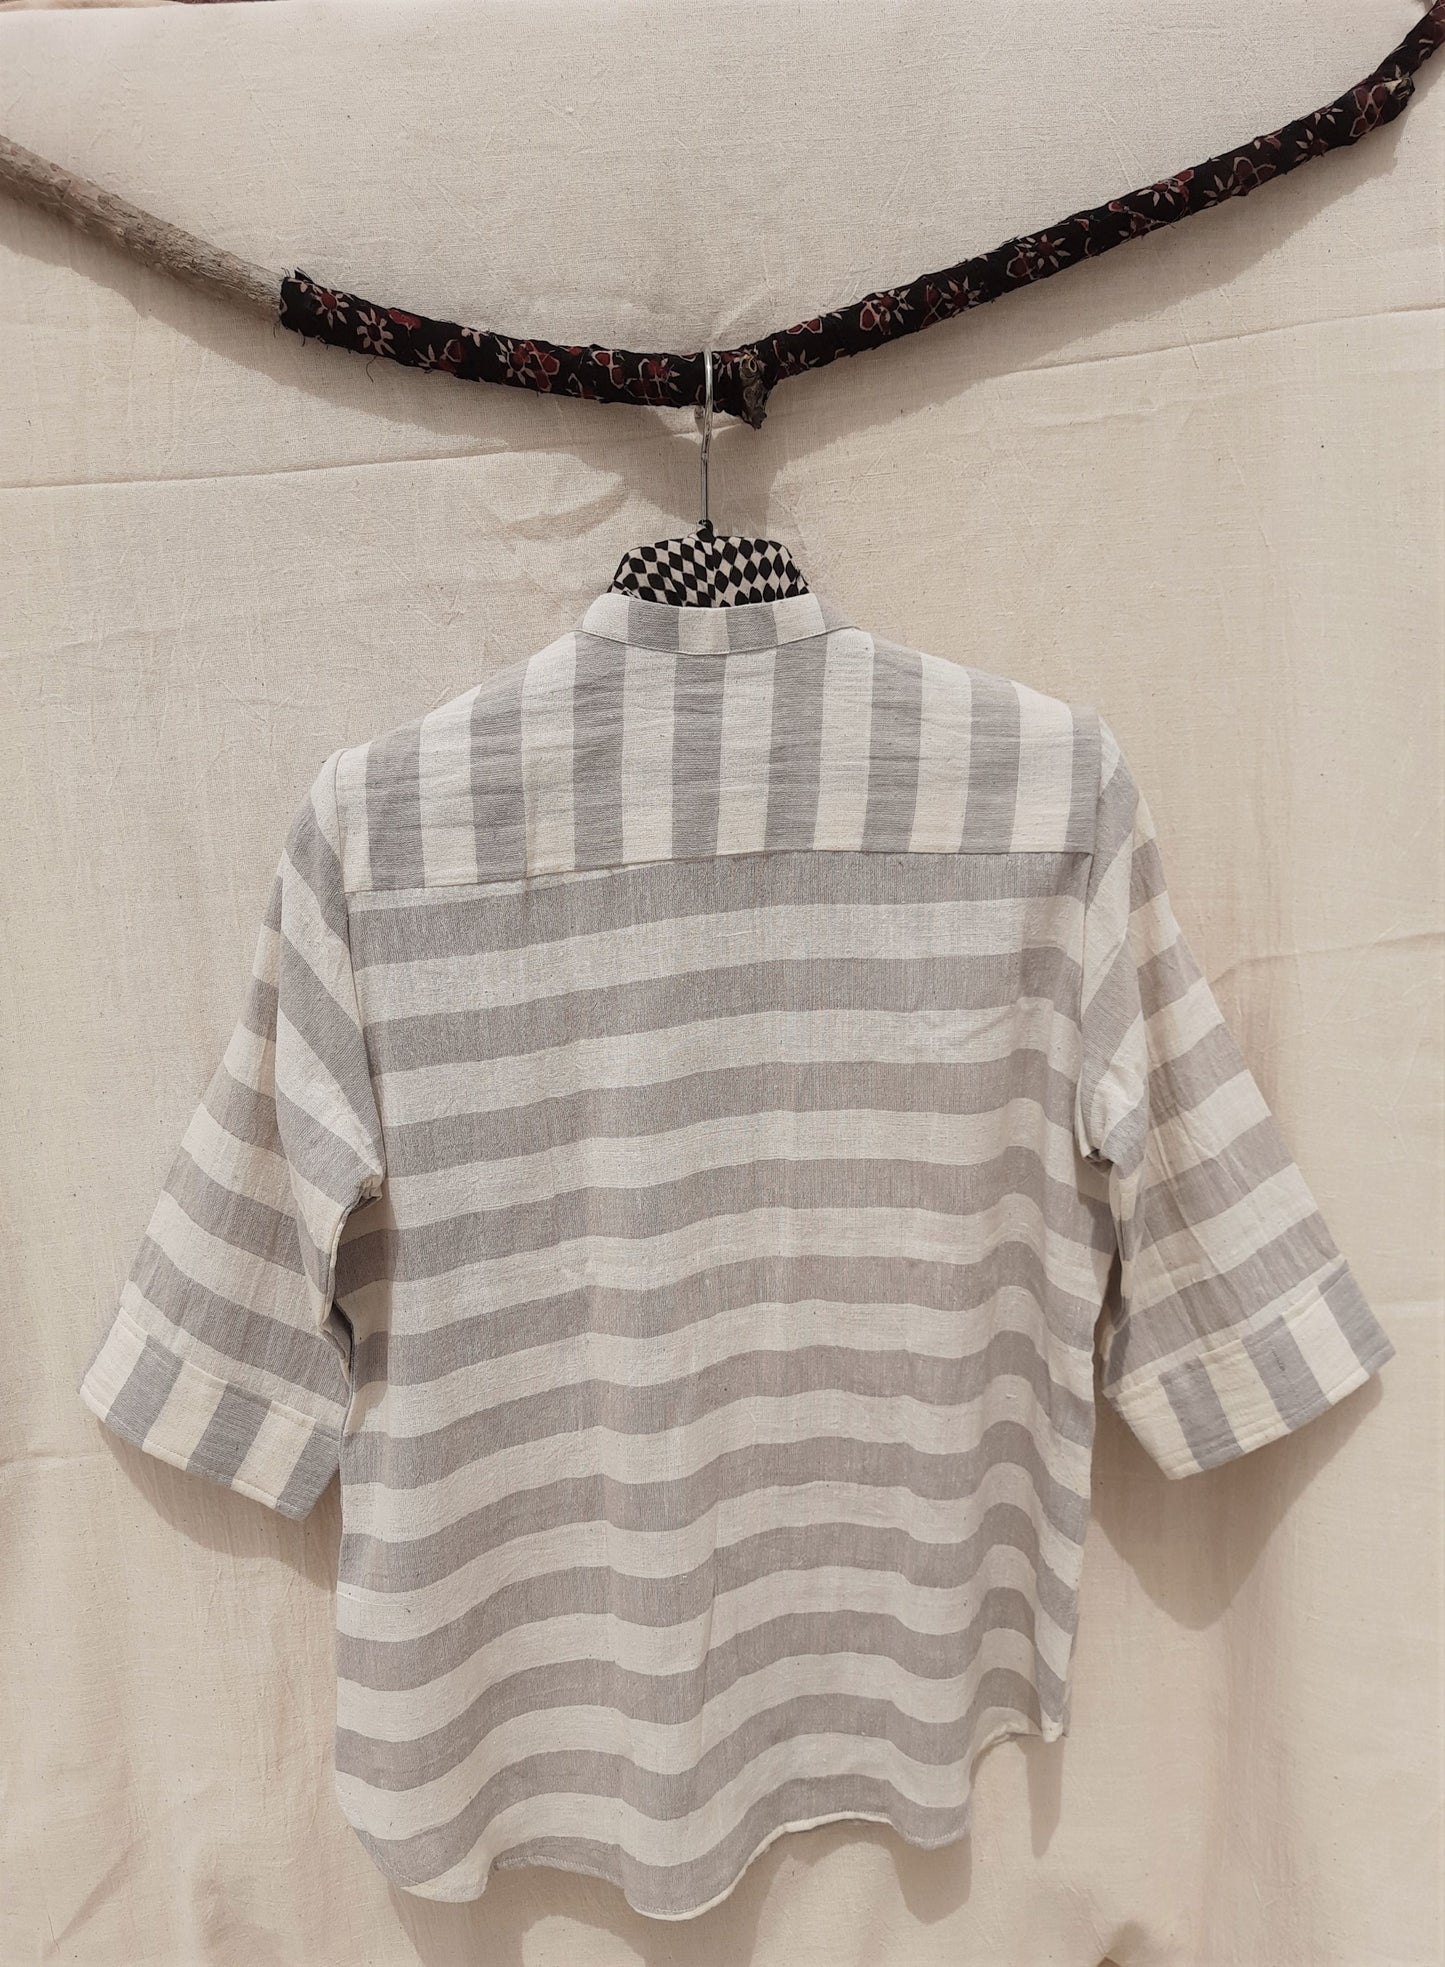 Stripes handwoven organic cotton women's shirt, Hand spun organic cotton stripes shirt, Sustainable fashion